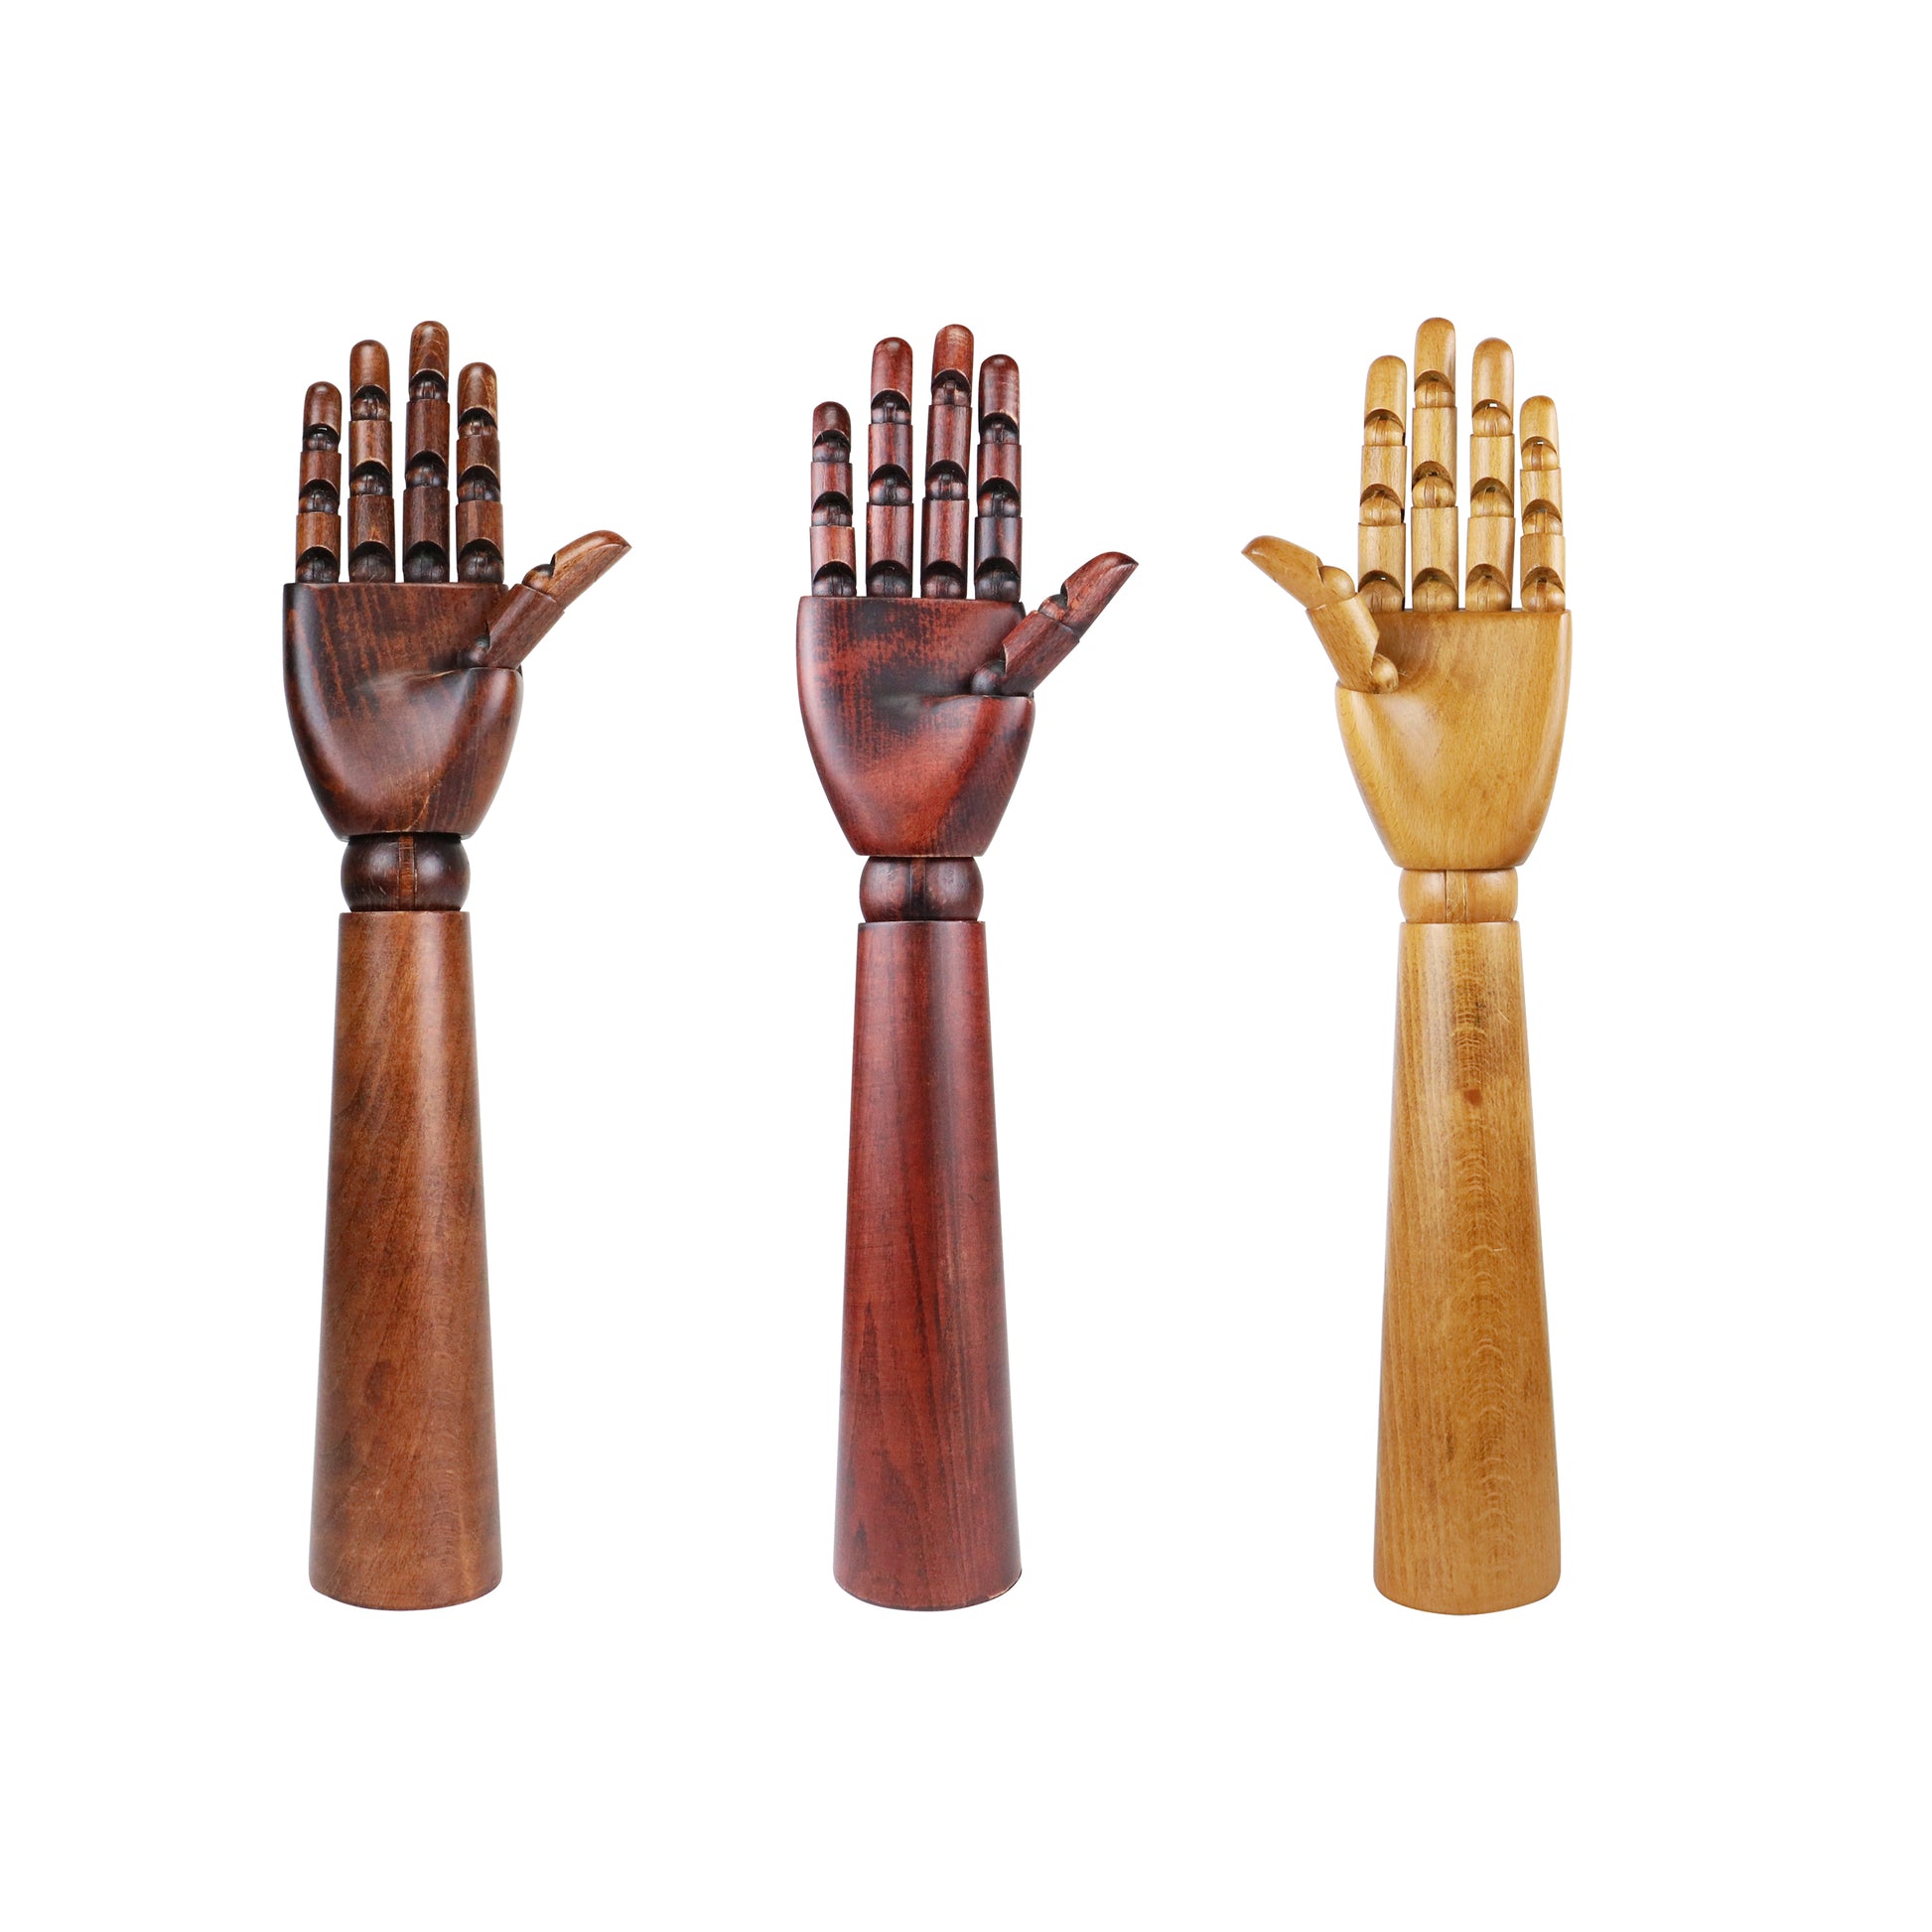 12 Inch Wooden Hand Model Flexible Moveable Fingers Manikin Hand